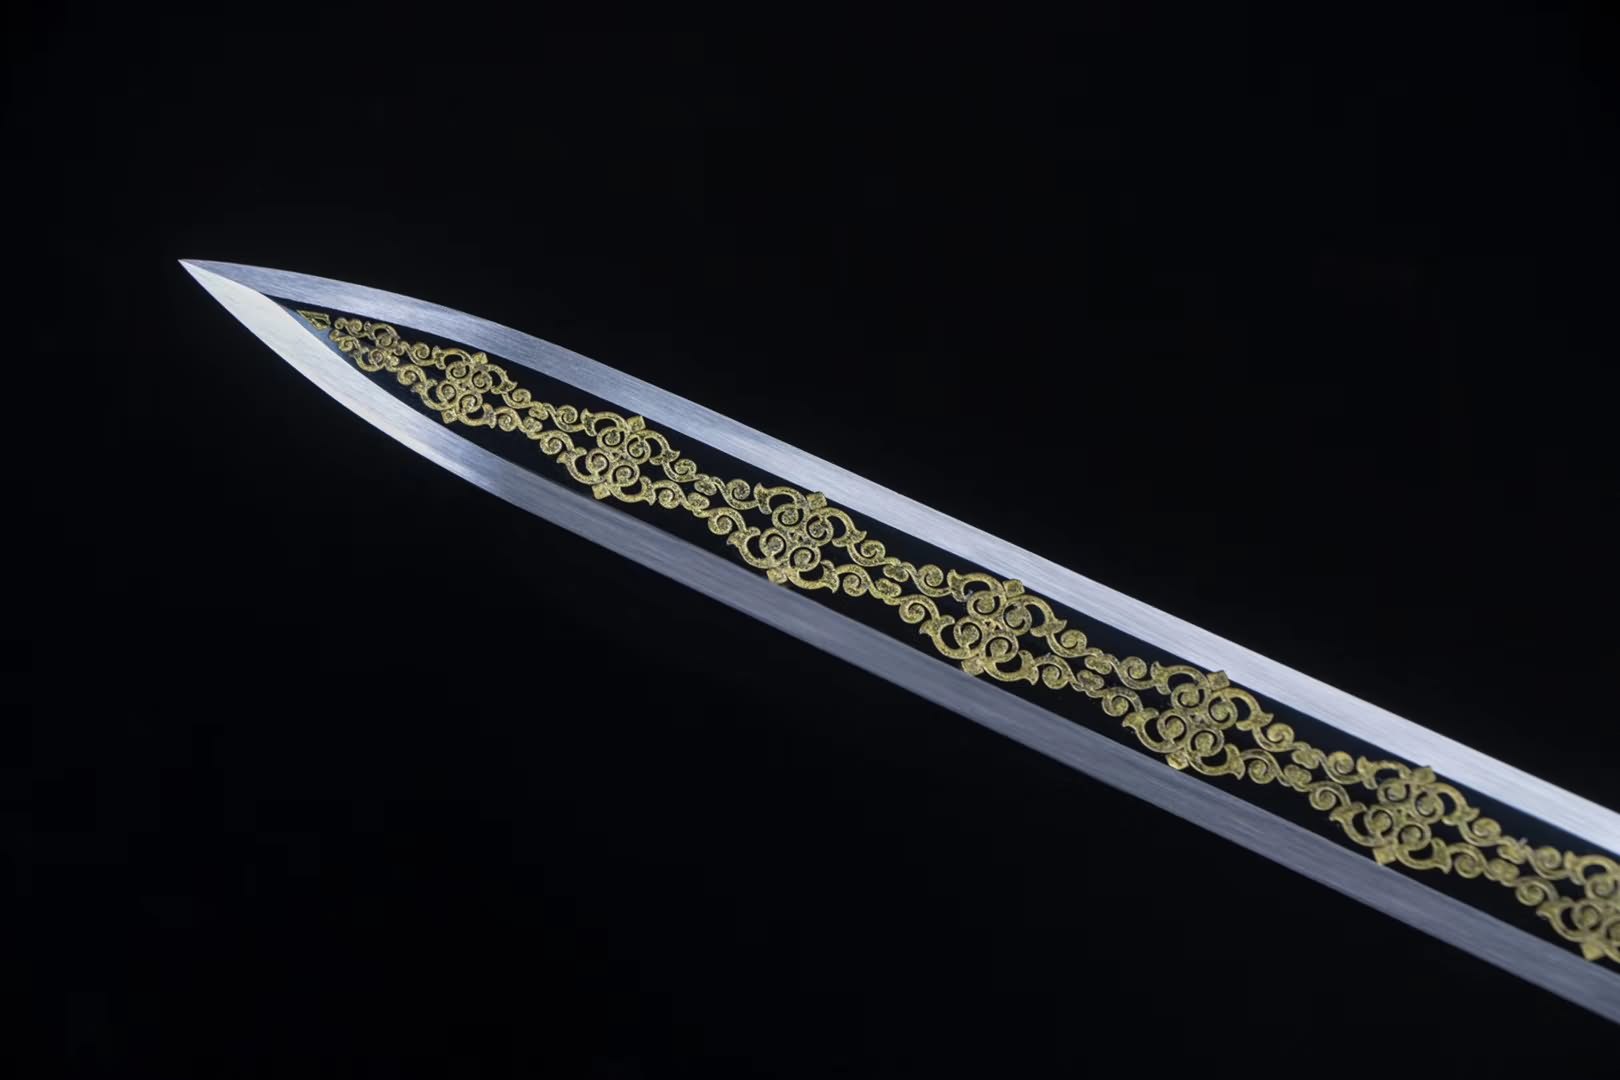 Han jian sword,Etch blade,Redwood scabbard - Chinese sword shop